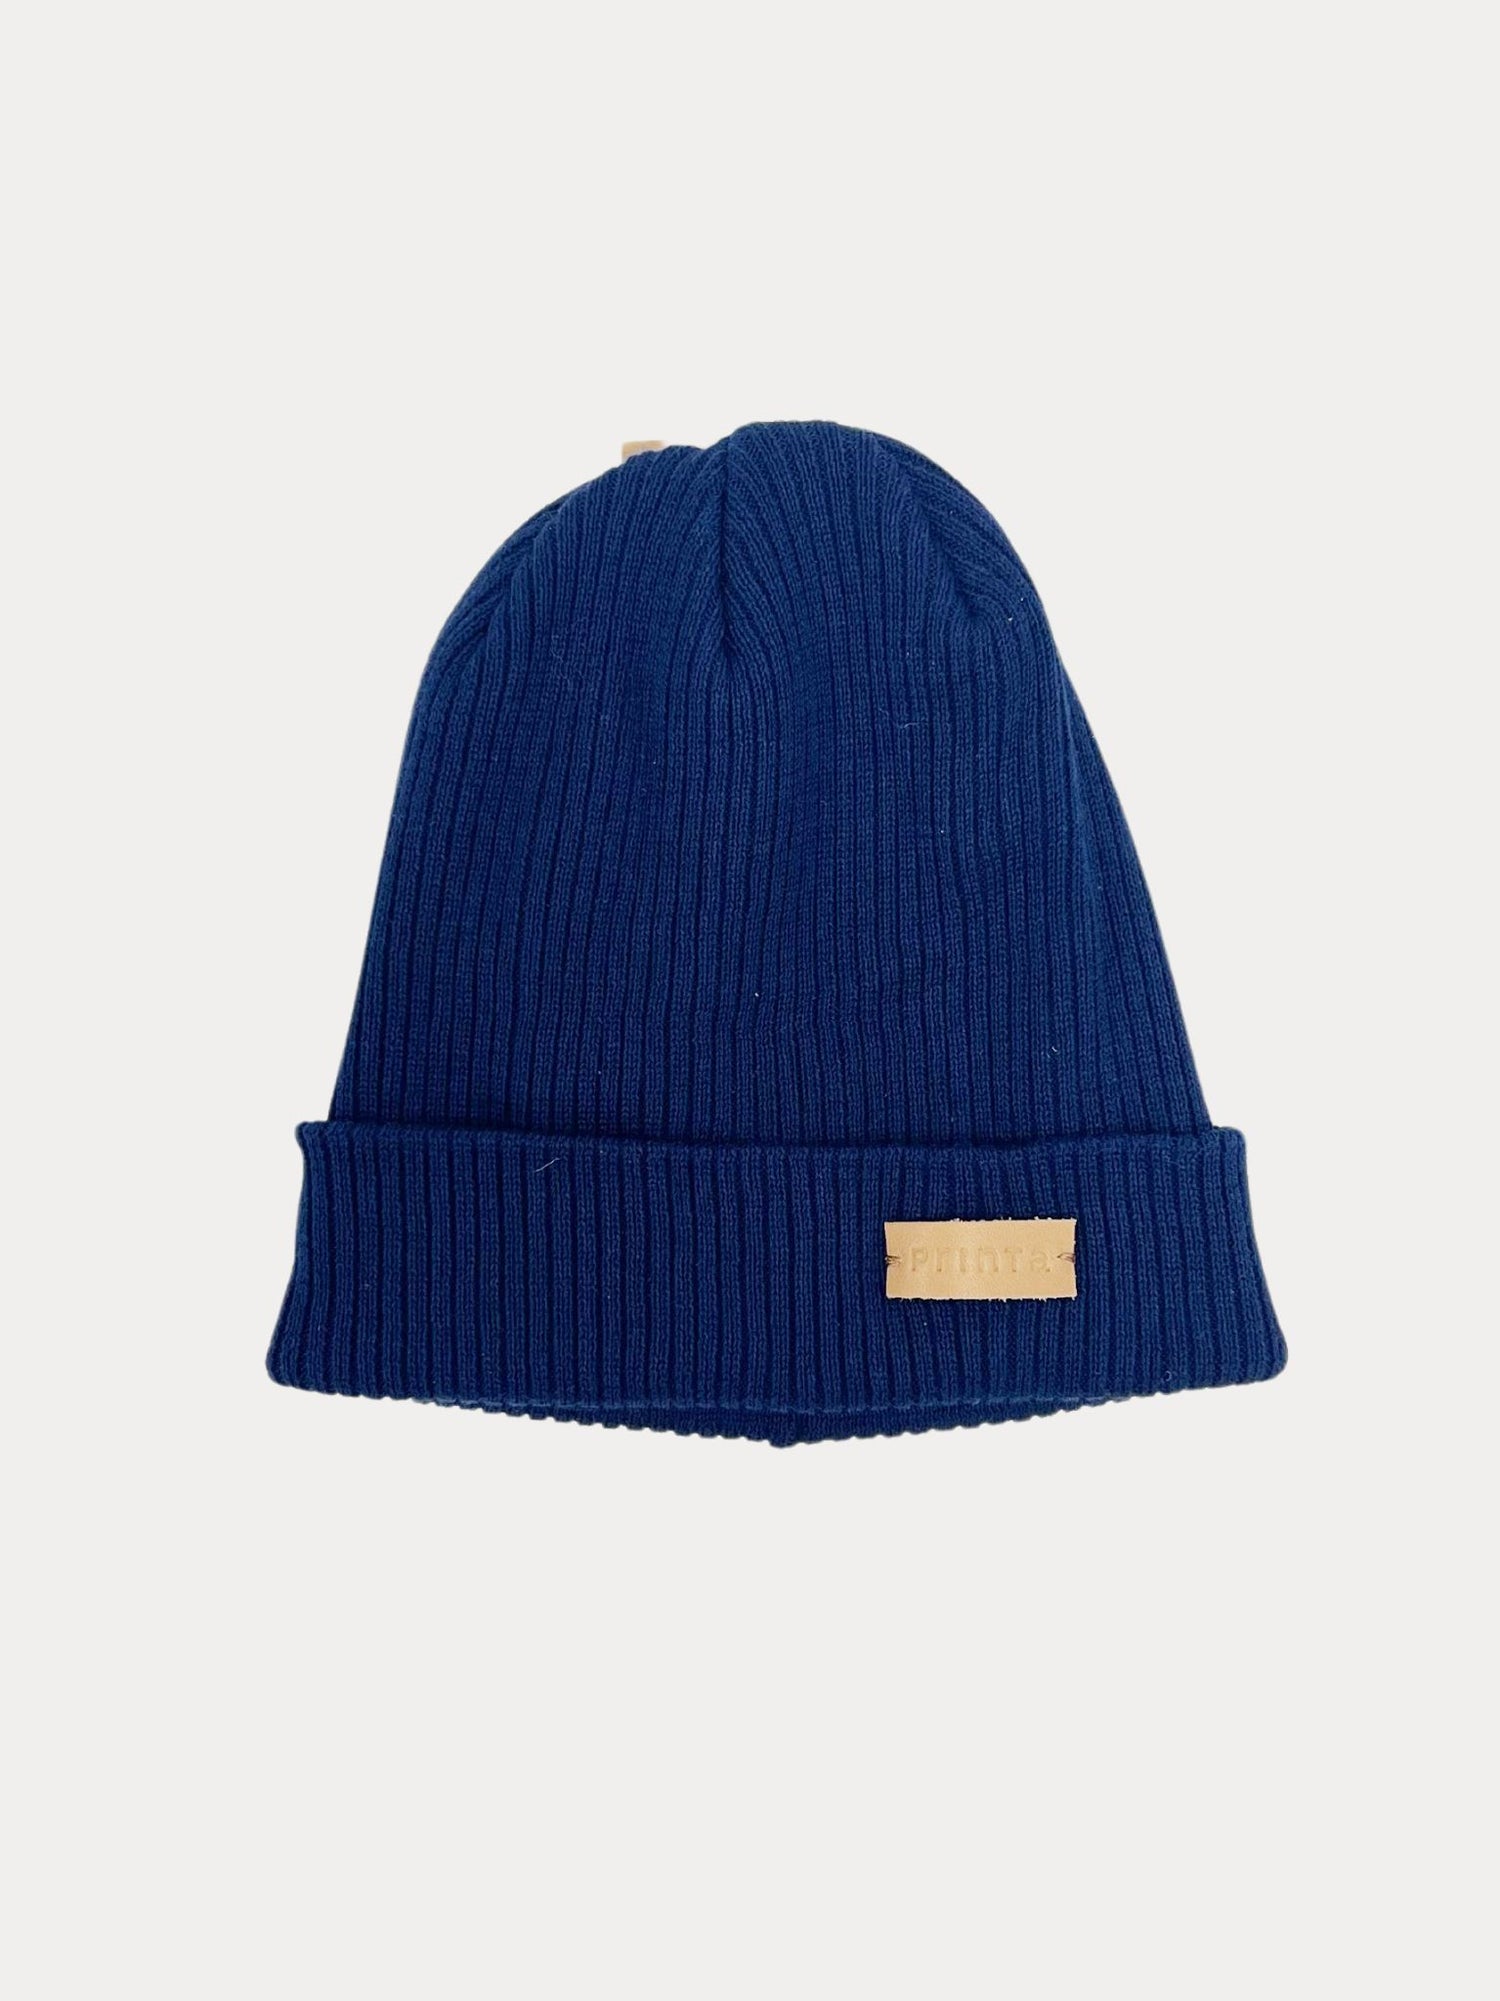 "Printa" dark blue knitted cap